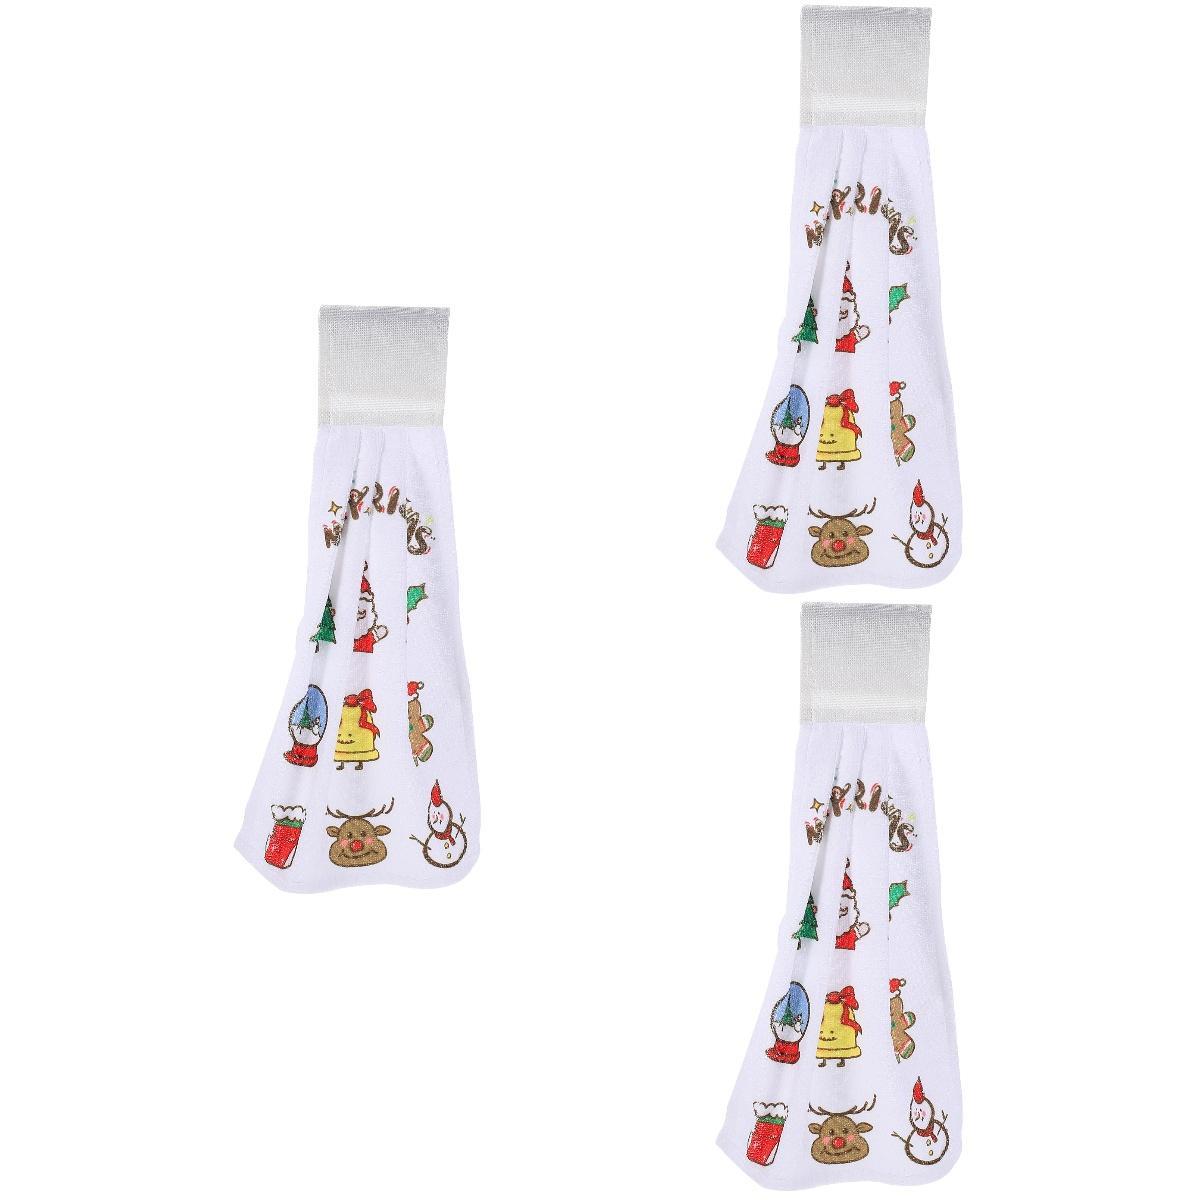 3 Count Christmas Tea Towels Xmas Hand Fingertip Festival Home Hanging Bath Microfiber White